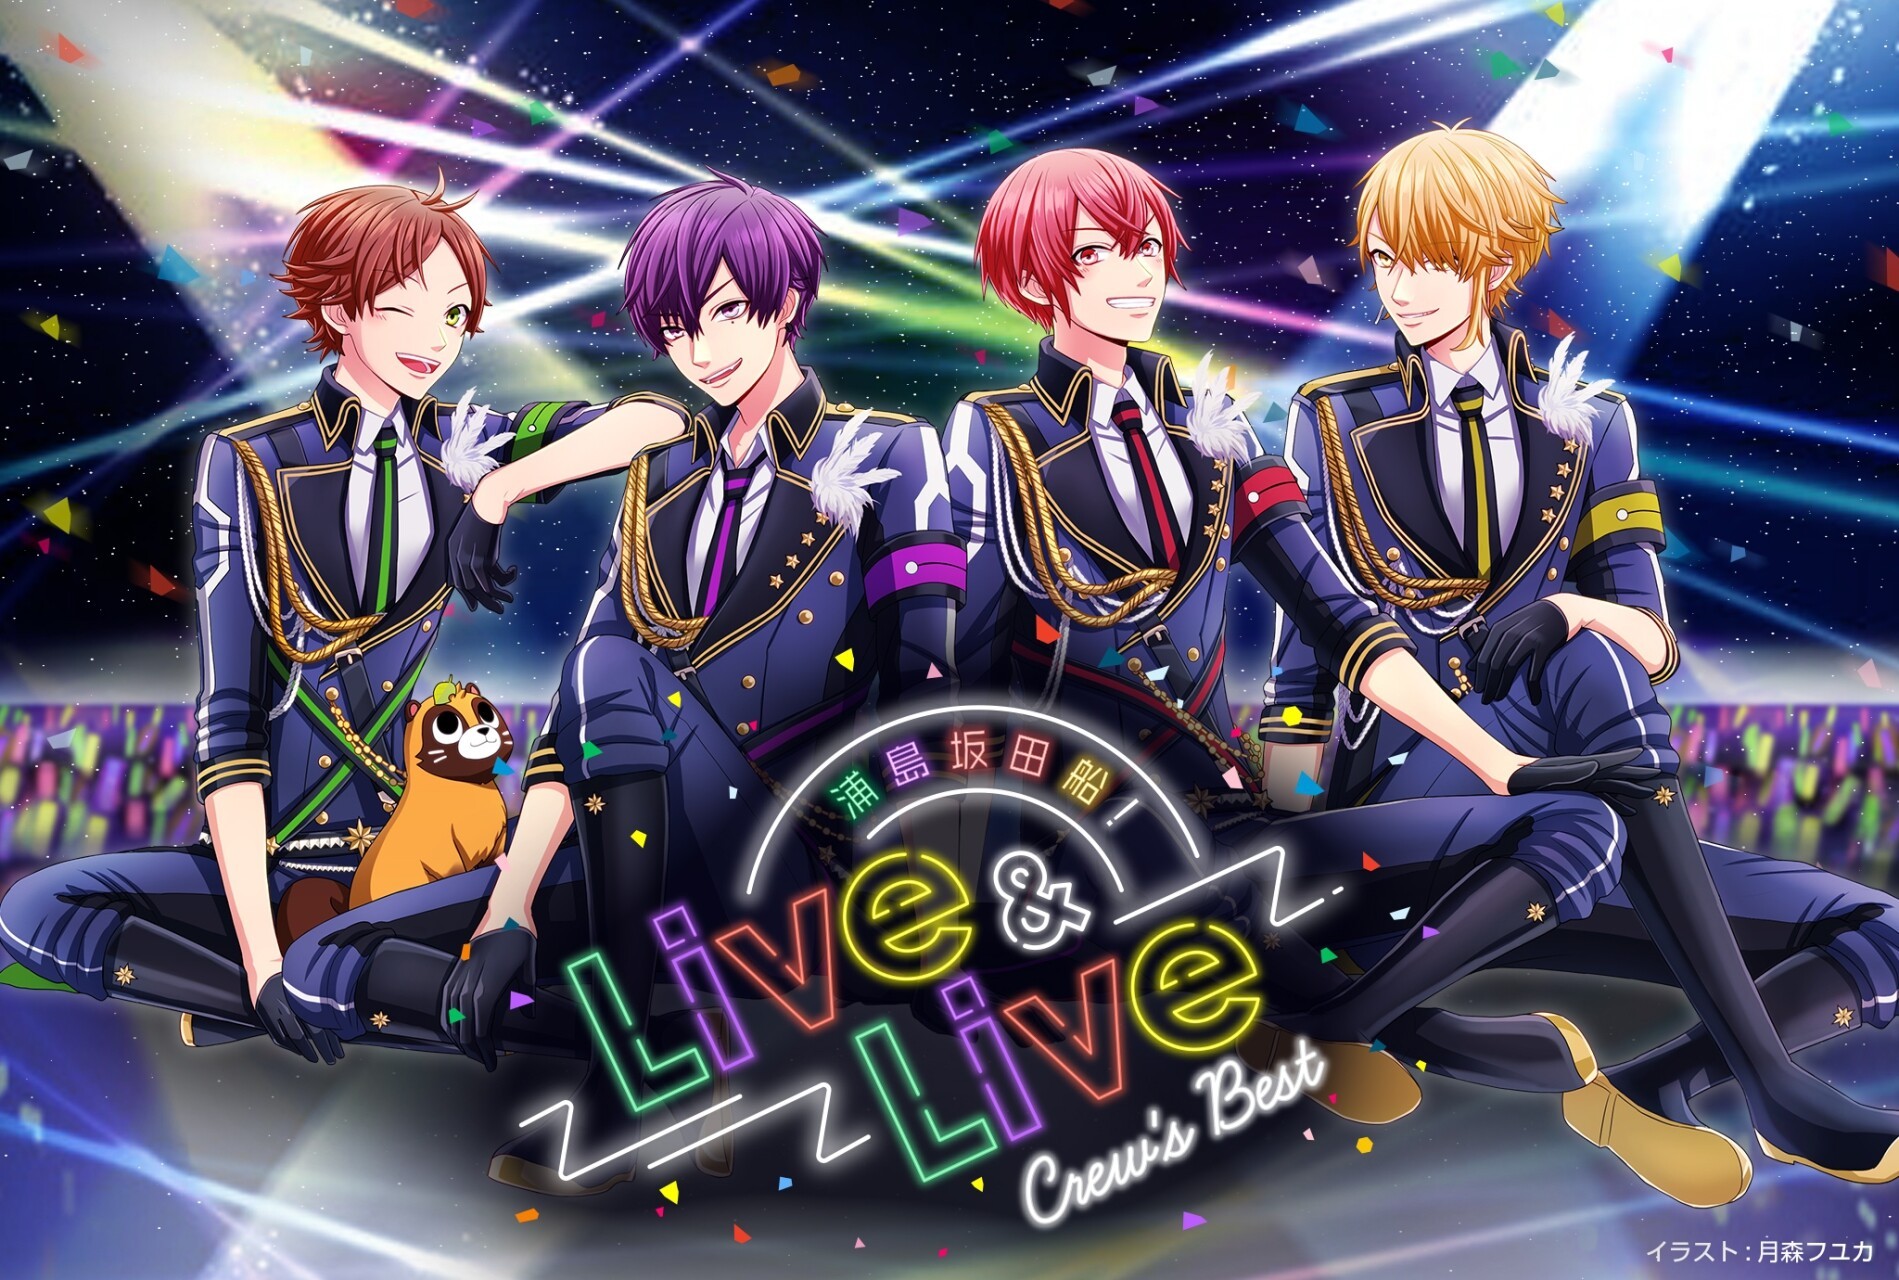 Urashimasakatasen Live Live Crew S Best 浦島坂田船 12 27 日 Online Streaming Urashimasakatasen Tickets